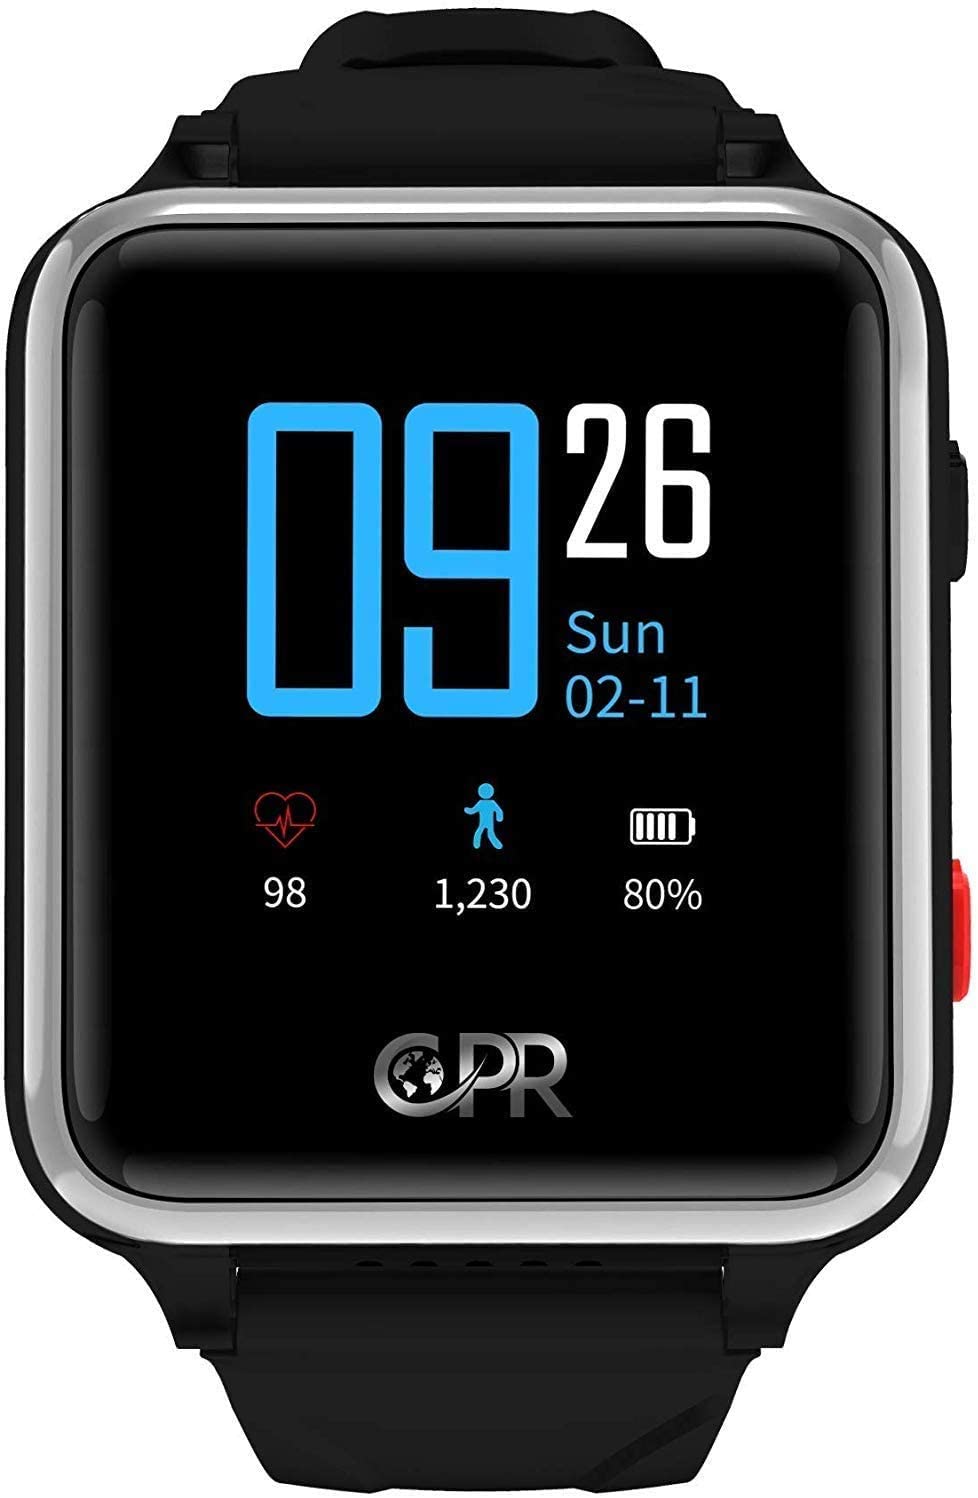 CPR Guardian II Personal Alarm Watch